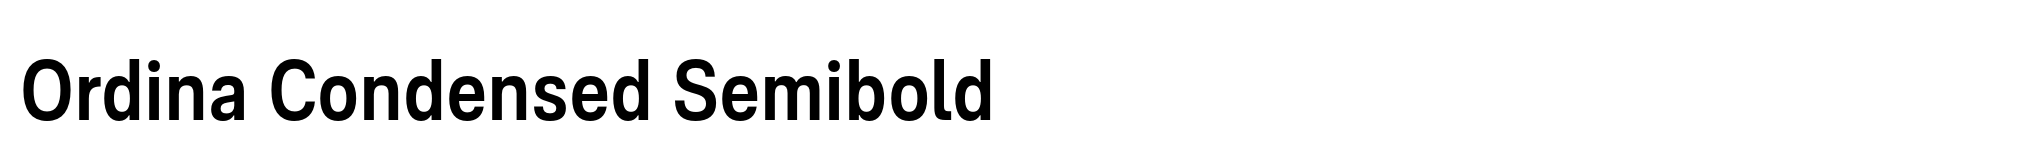 Ordina Condensed Semibold image